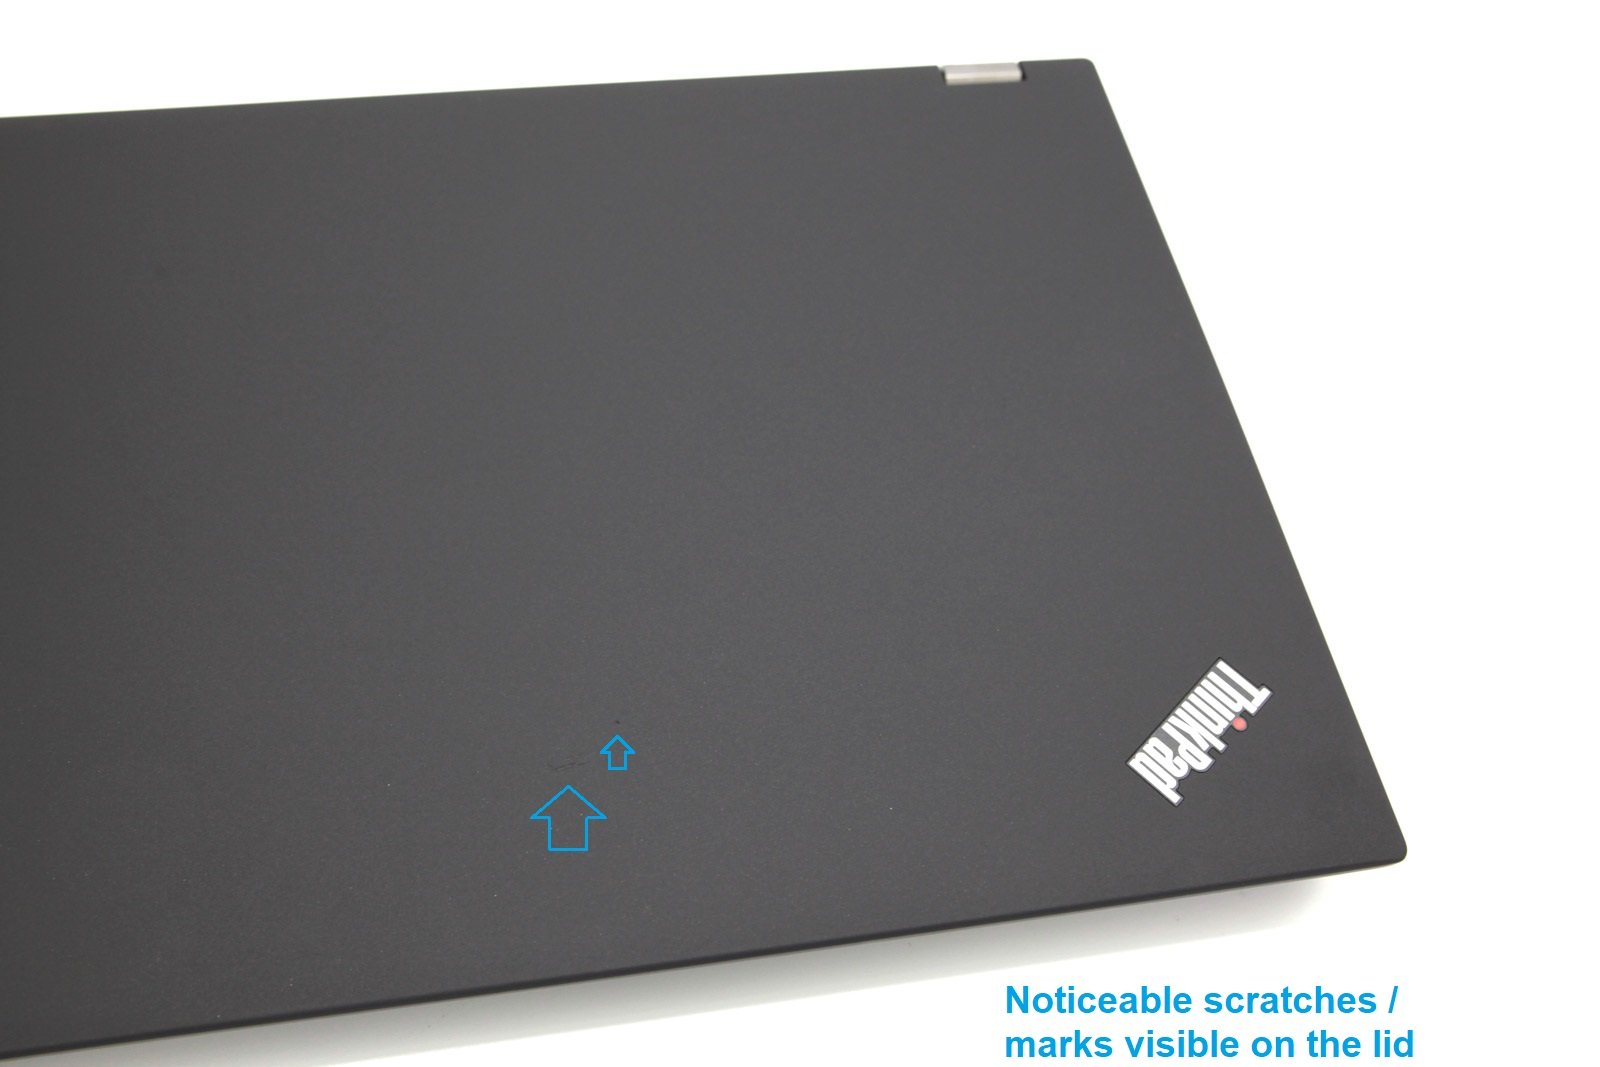 Lenovo ThinkPad P53 Laptop: Core i7-9750H, 512GB, 16GB, Quadro T1000, Warranty - CruiseTech